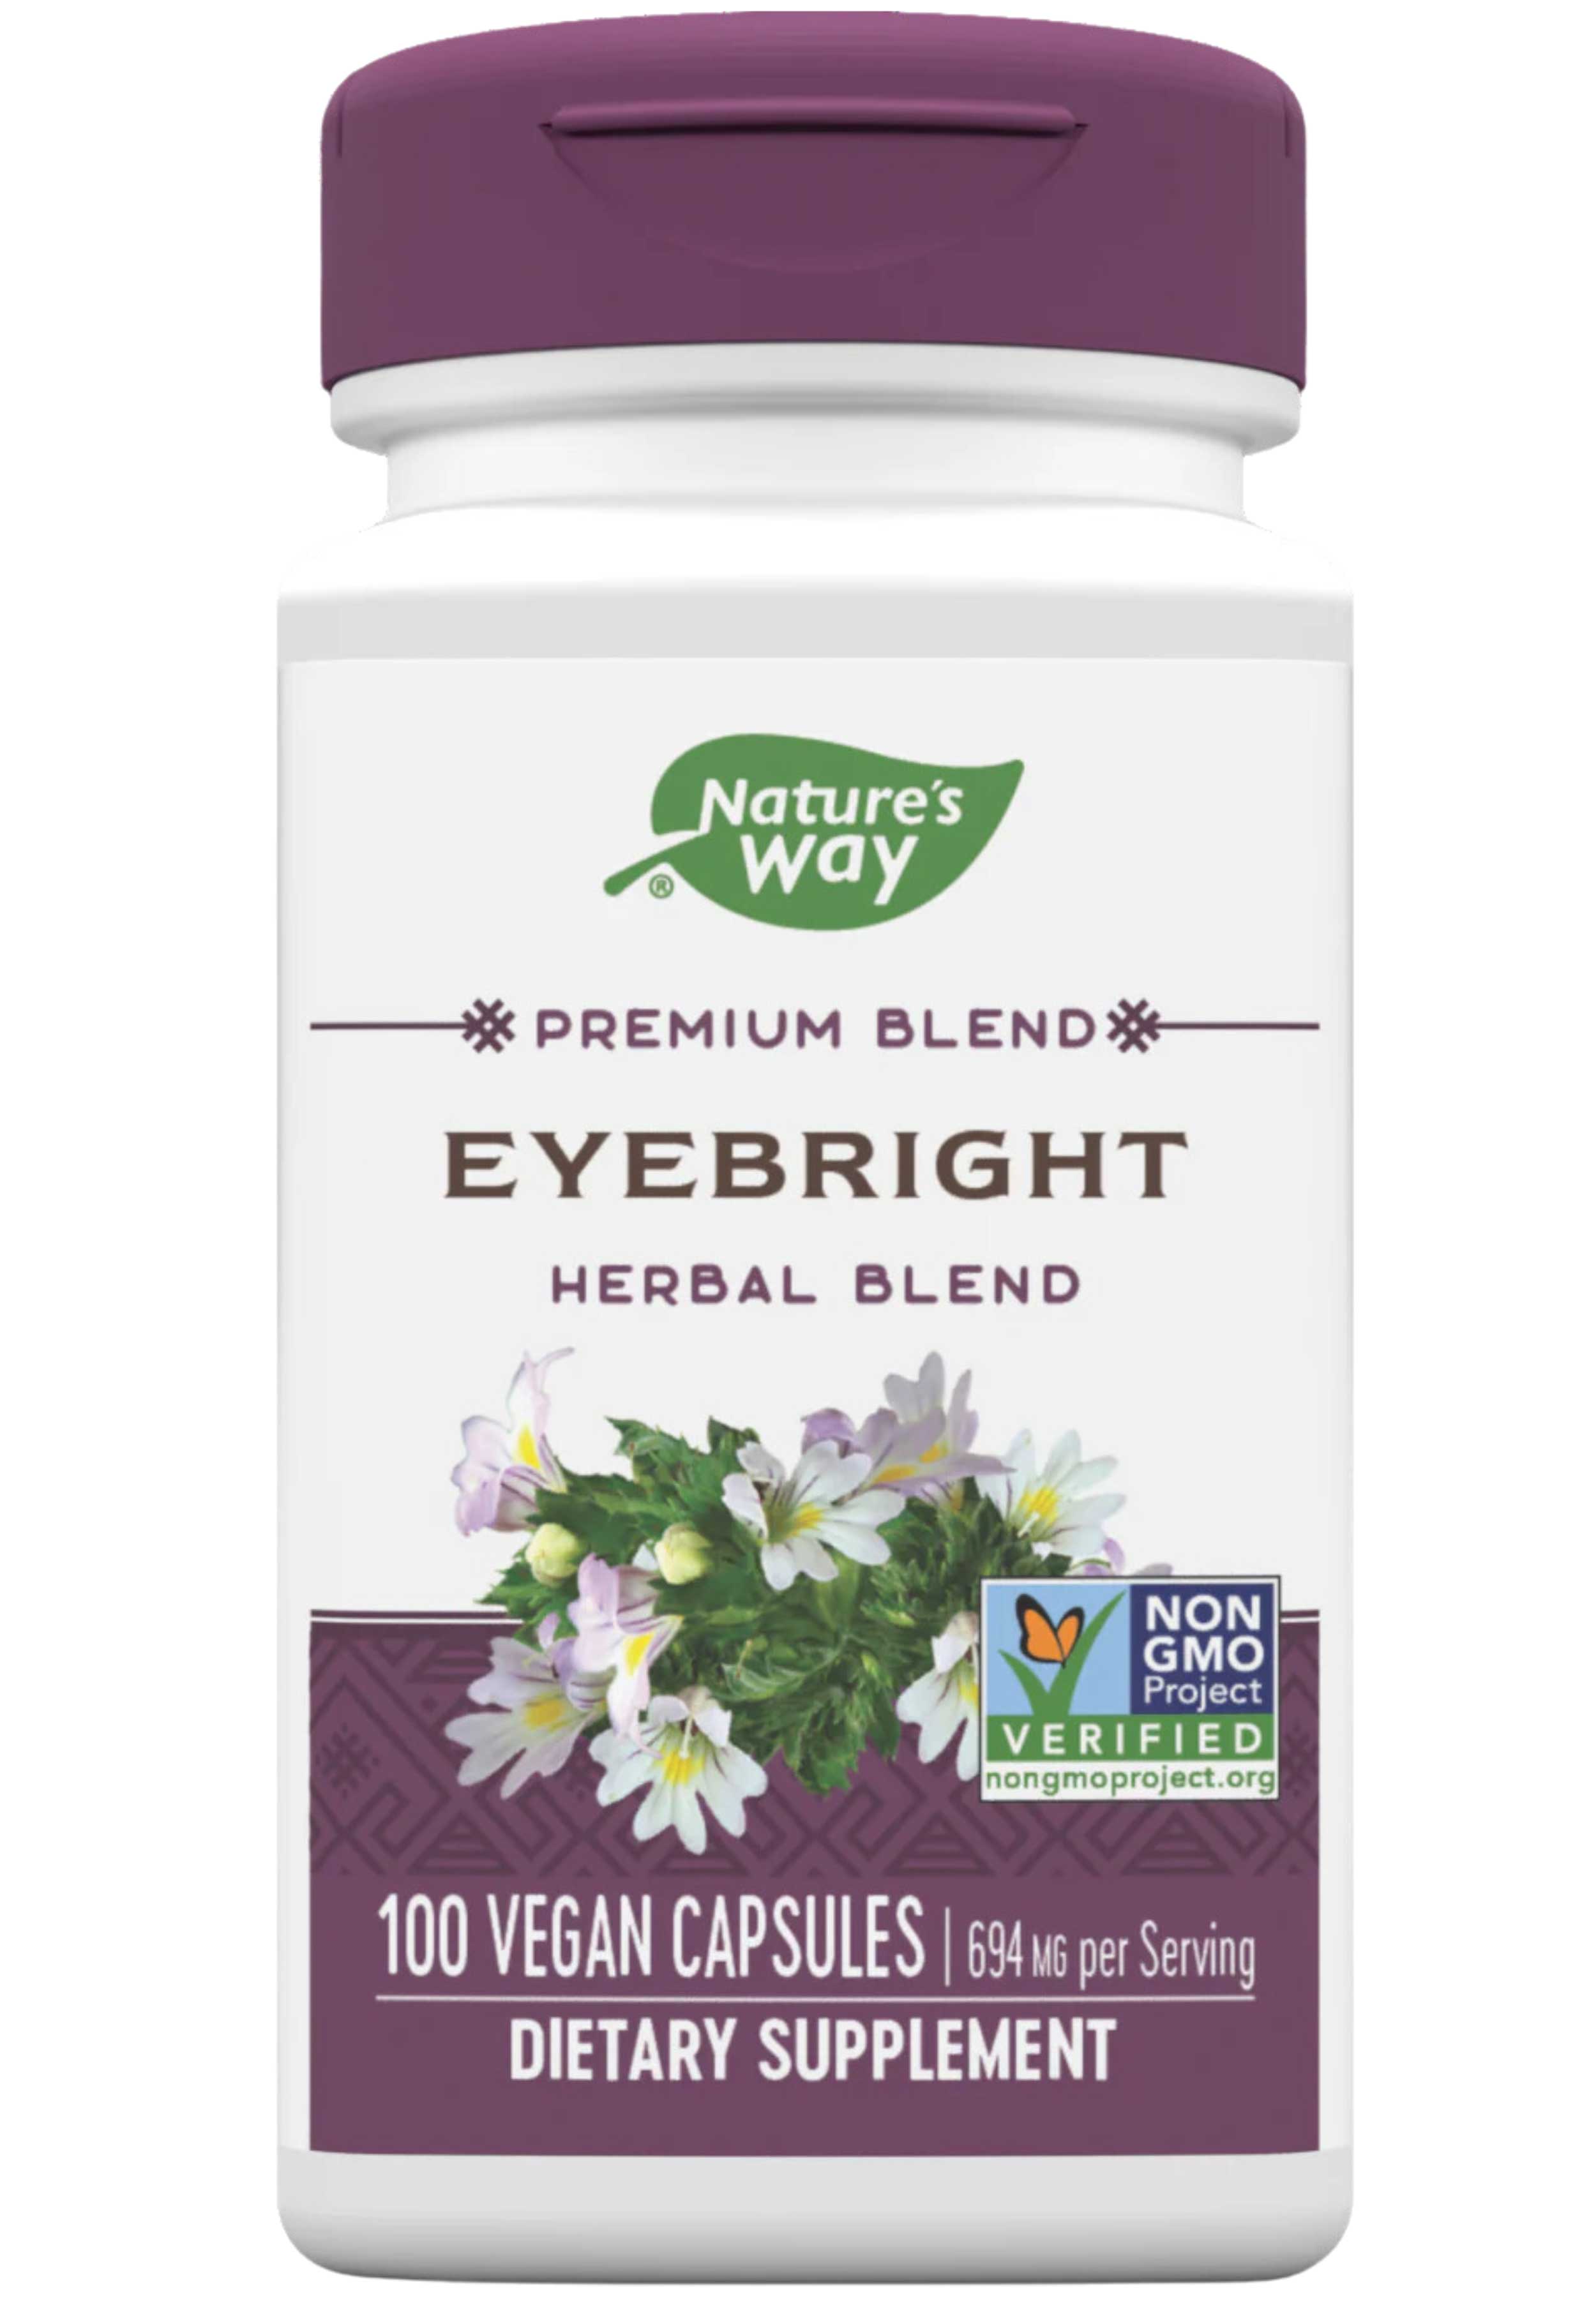 Nature's Way Eyebright Herbal Blend (Premium Blend)